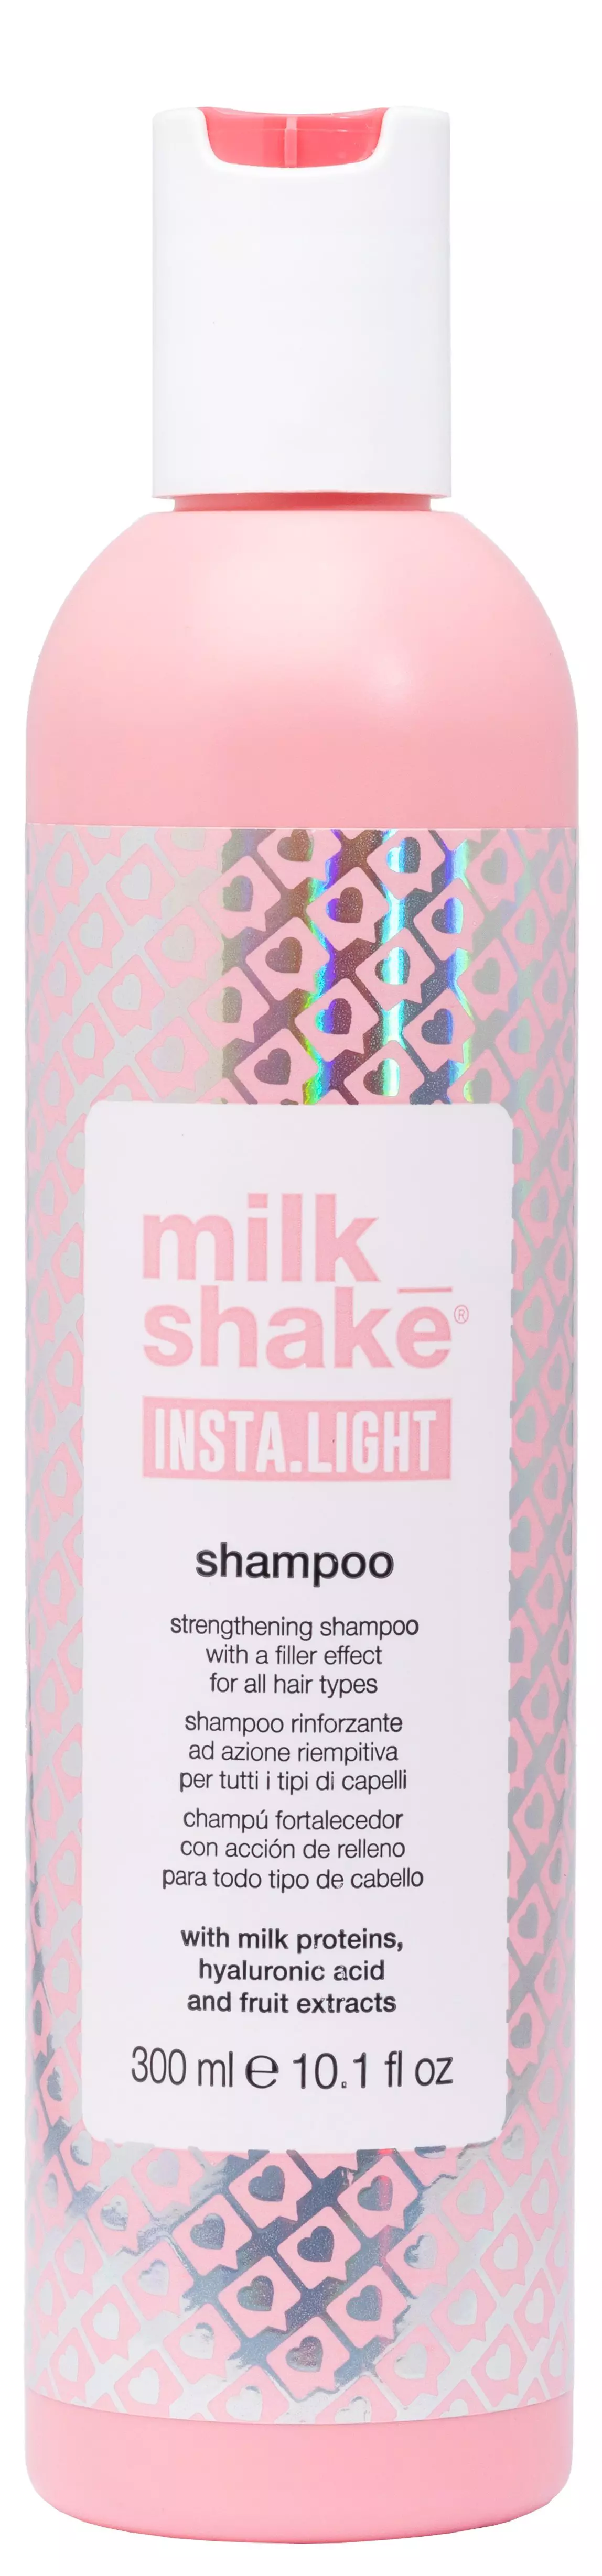 Milkshake Insta.Light Shampoo Ml